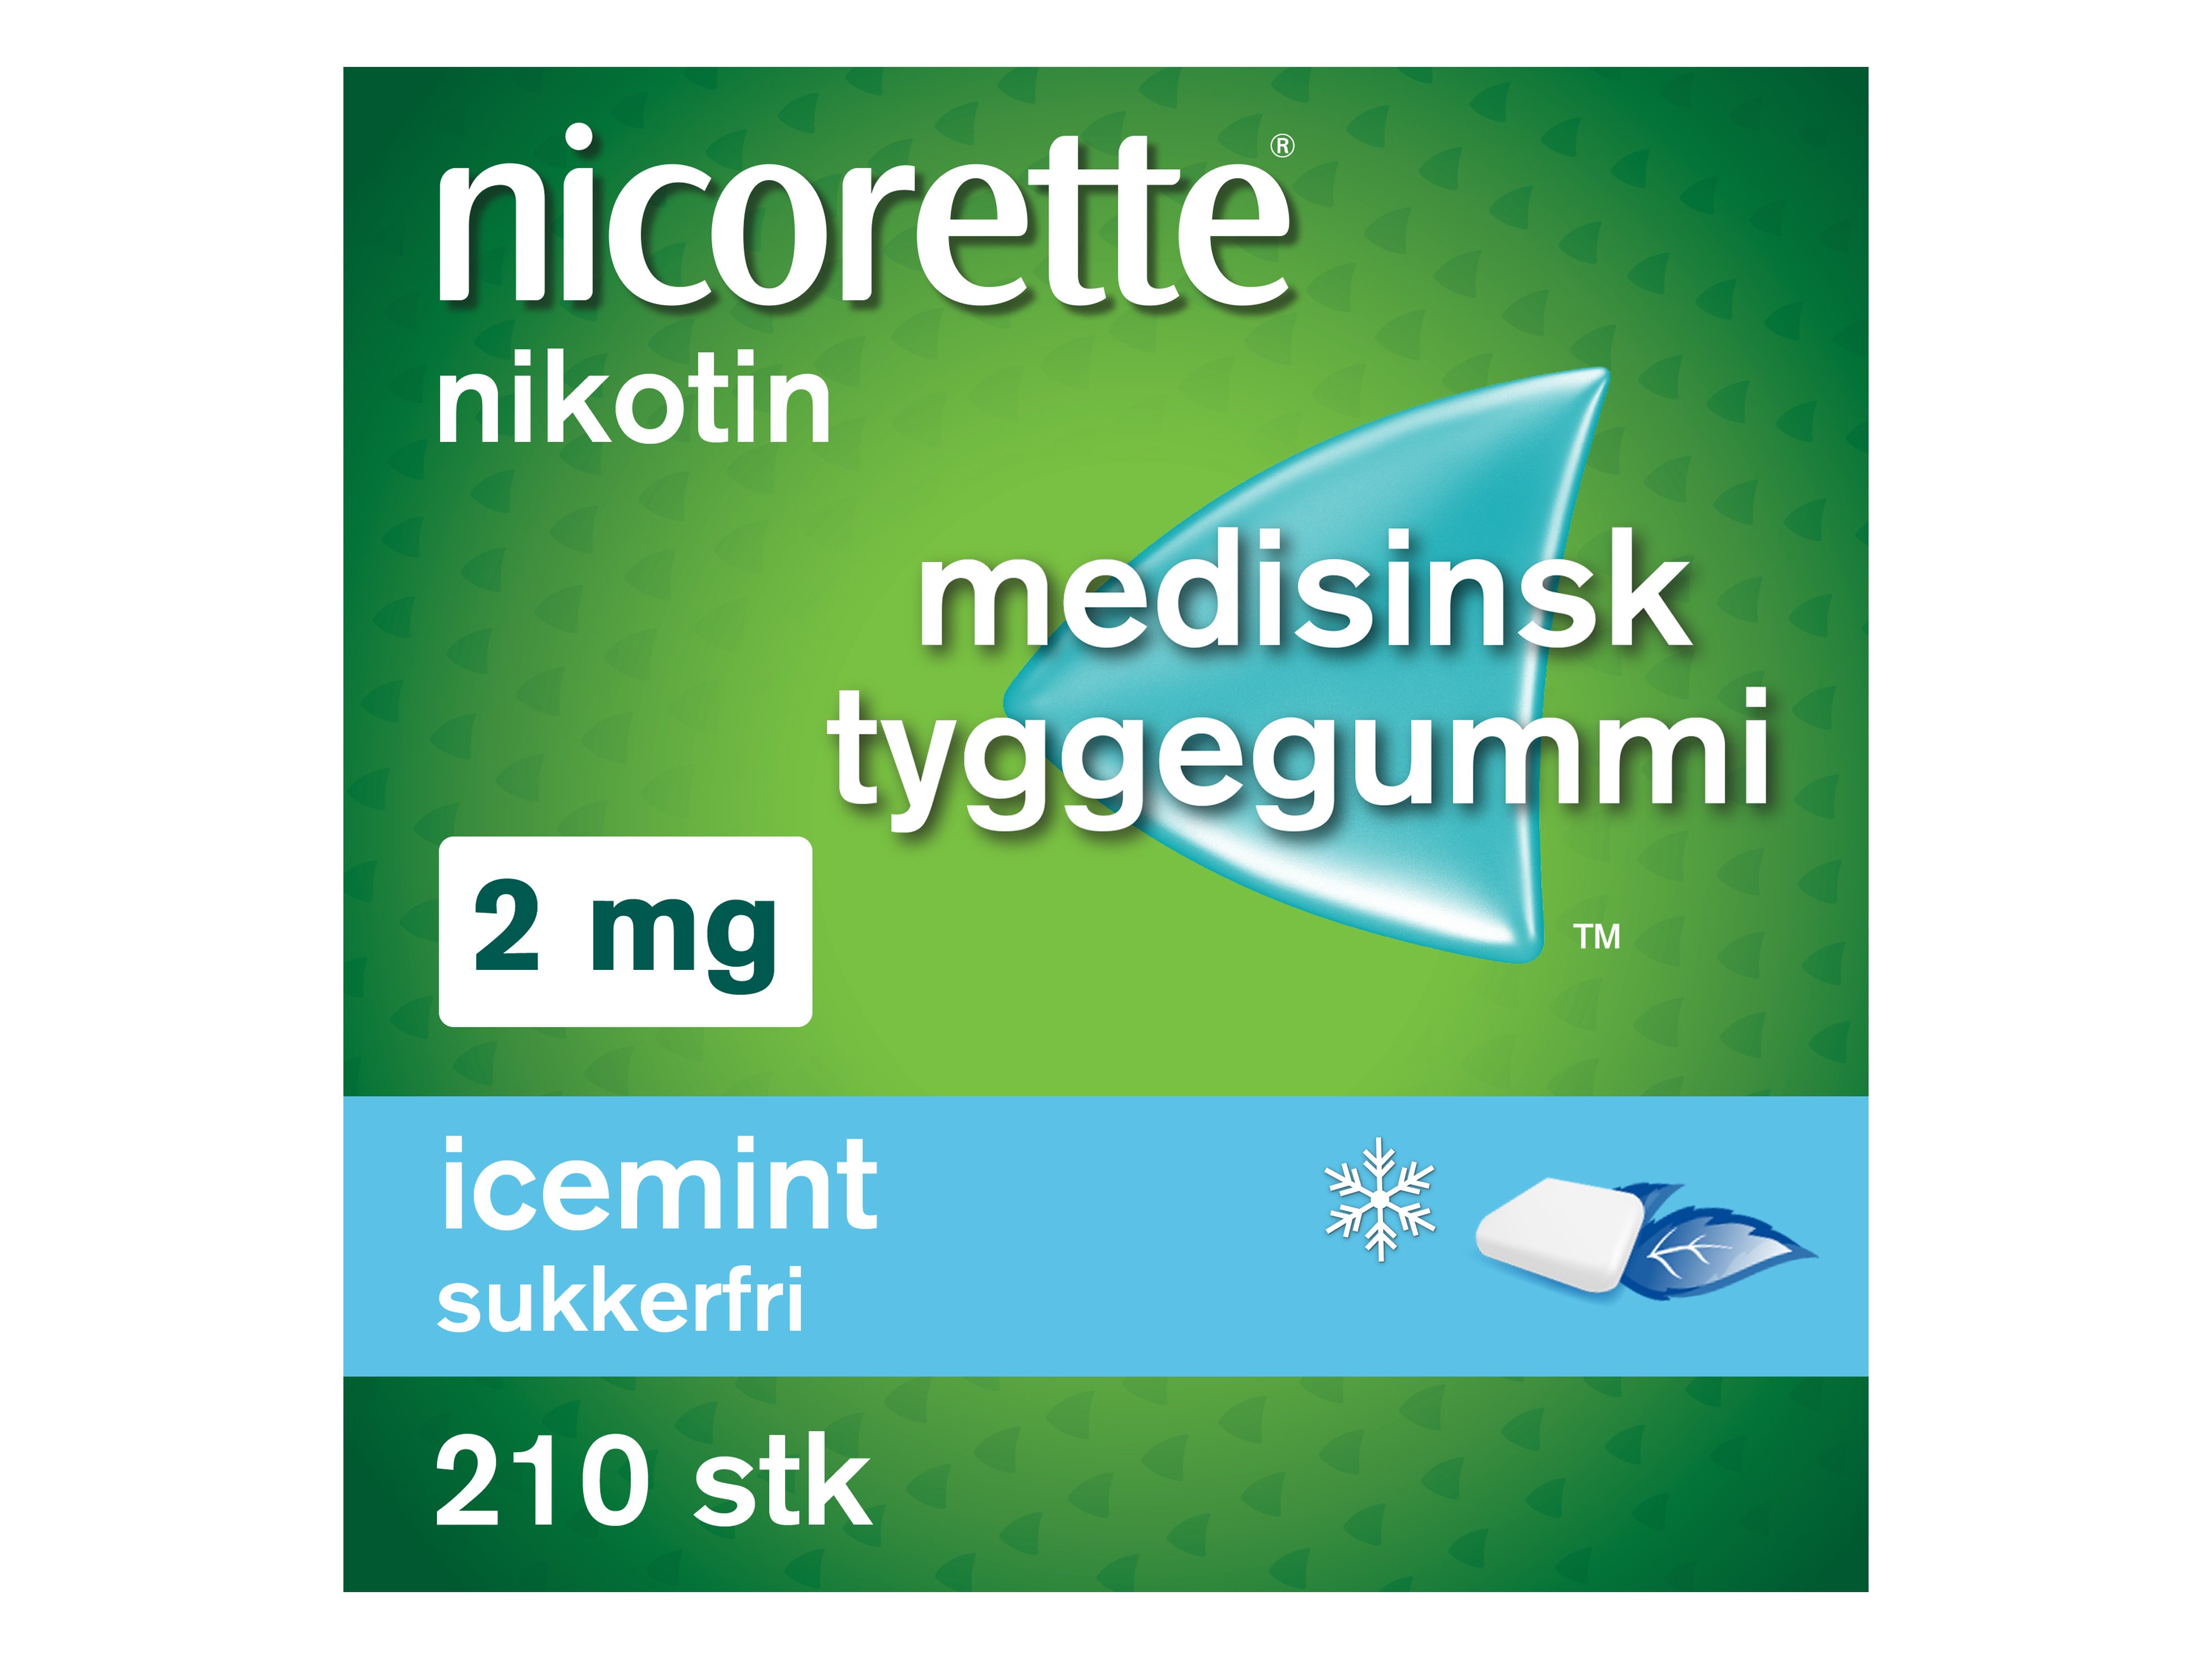 Nicorette 2 mg tyggegummi, Icemint, 210 stk.